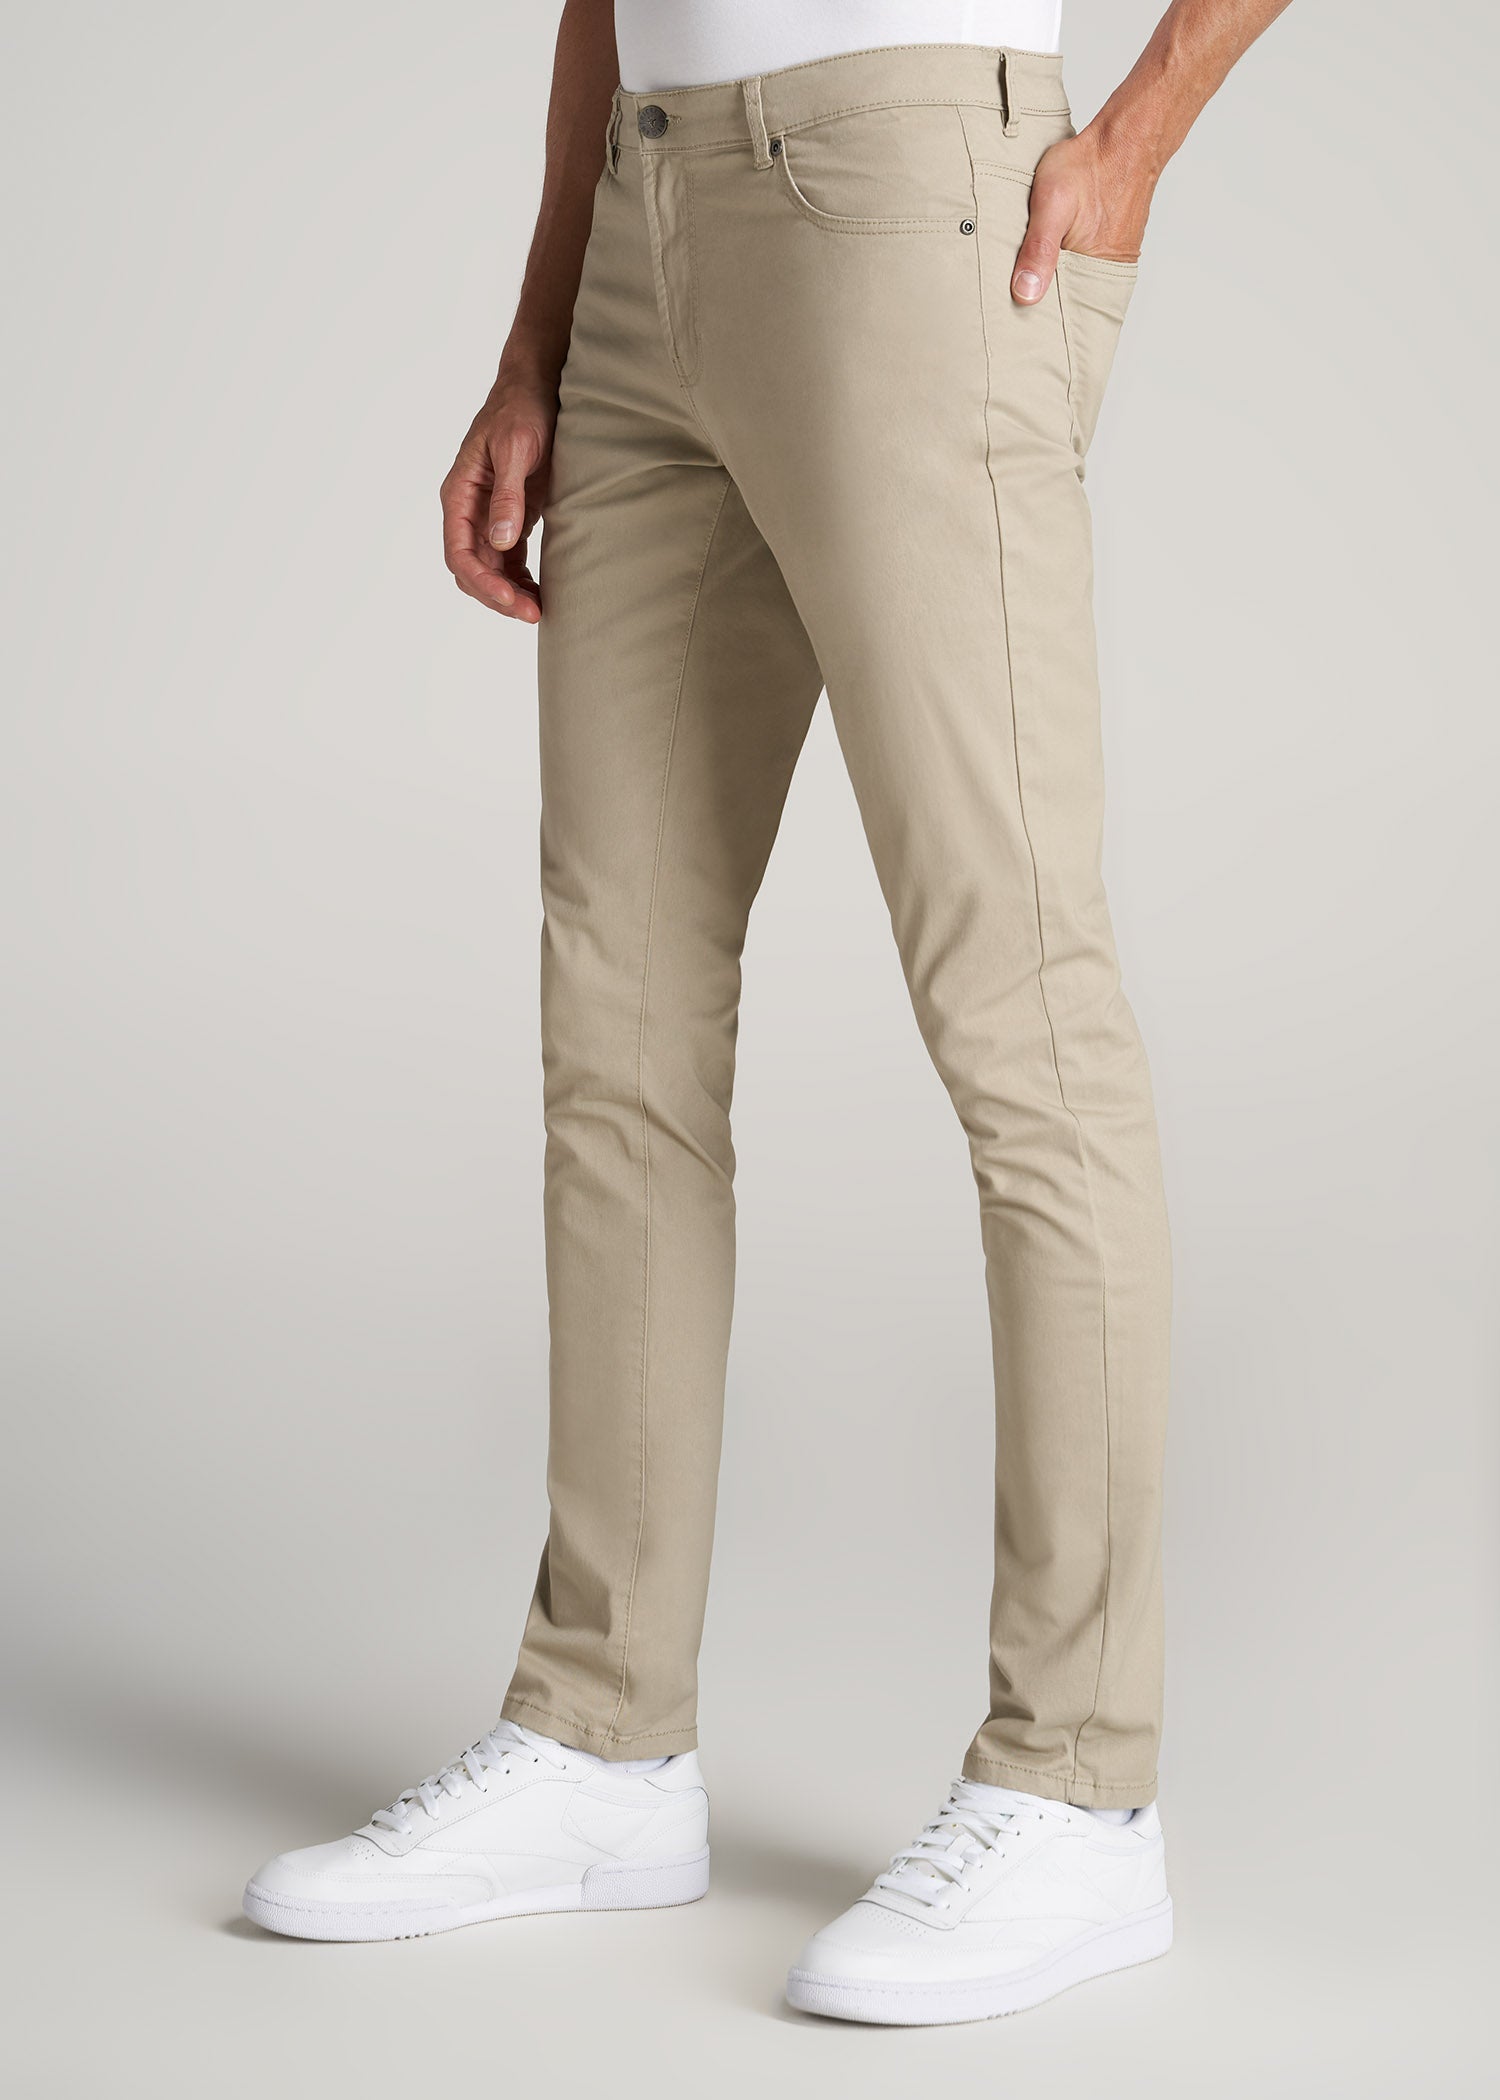 Men's Tall Carman Tapered Fit Five Pocket Pant Desert Khaki – American Tall